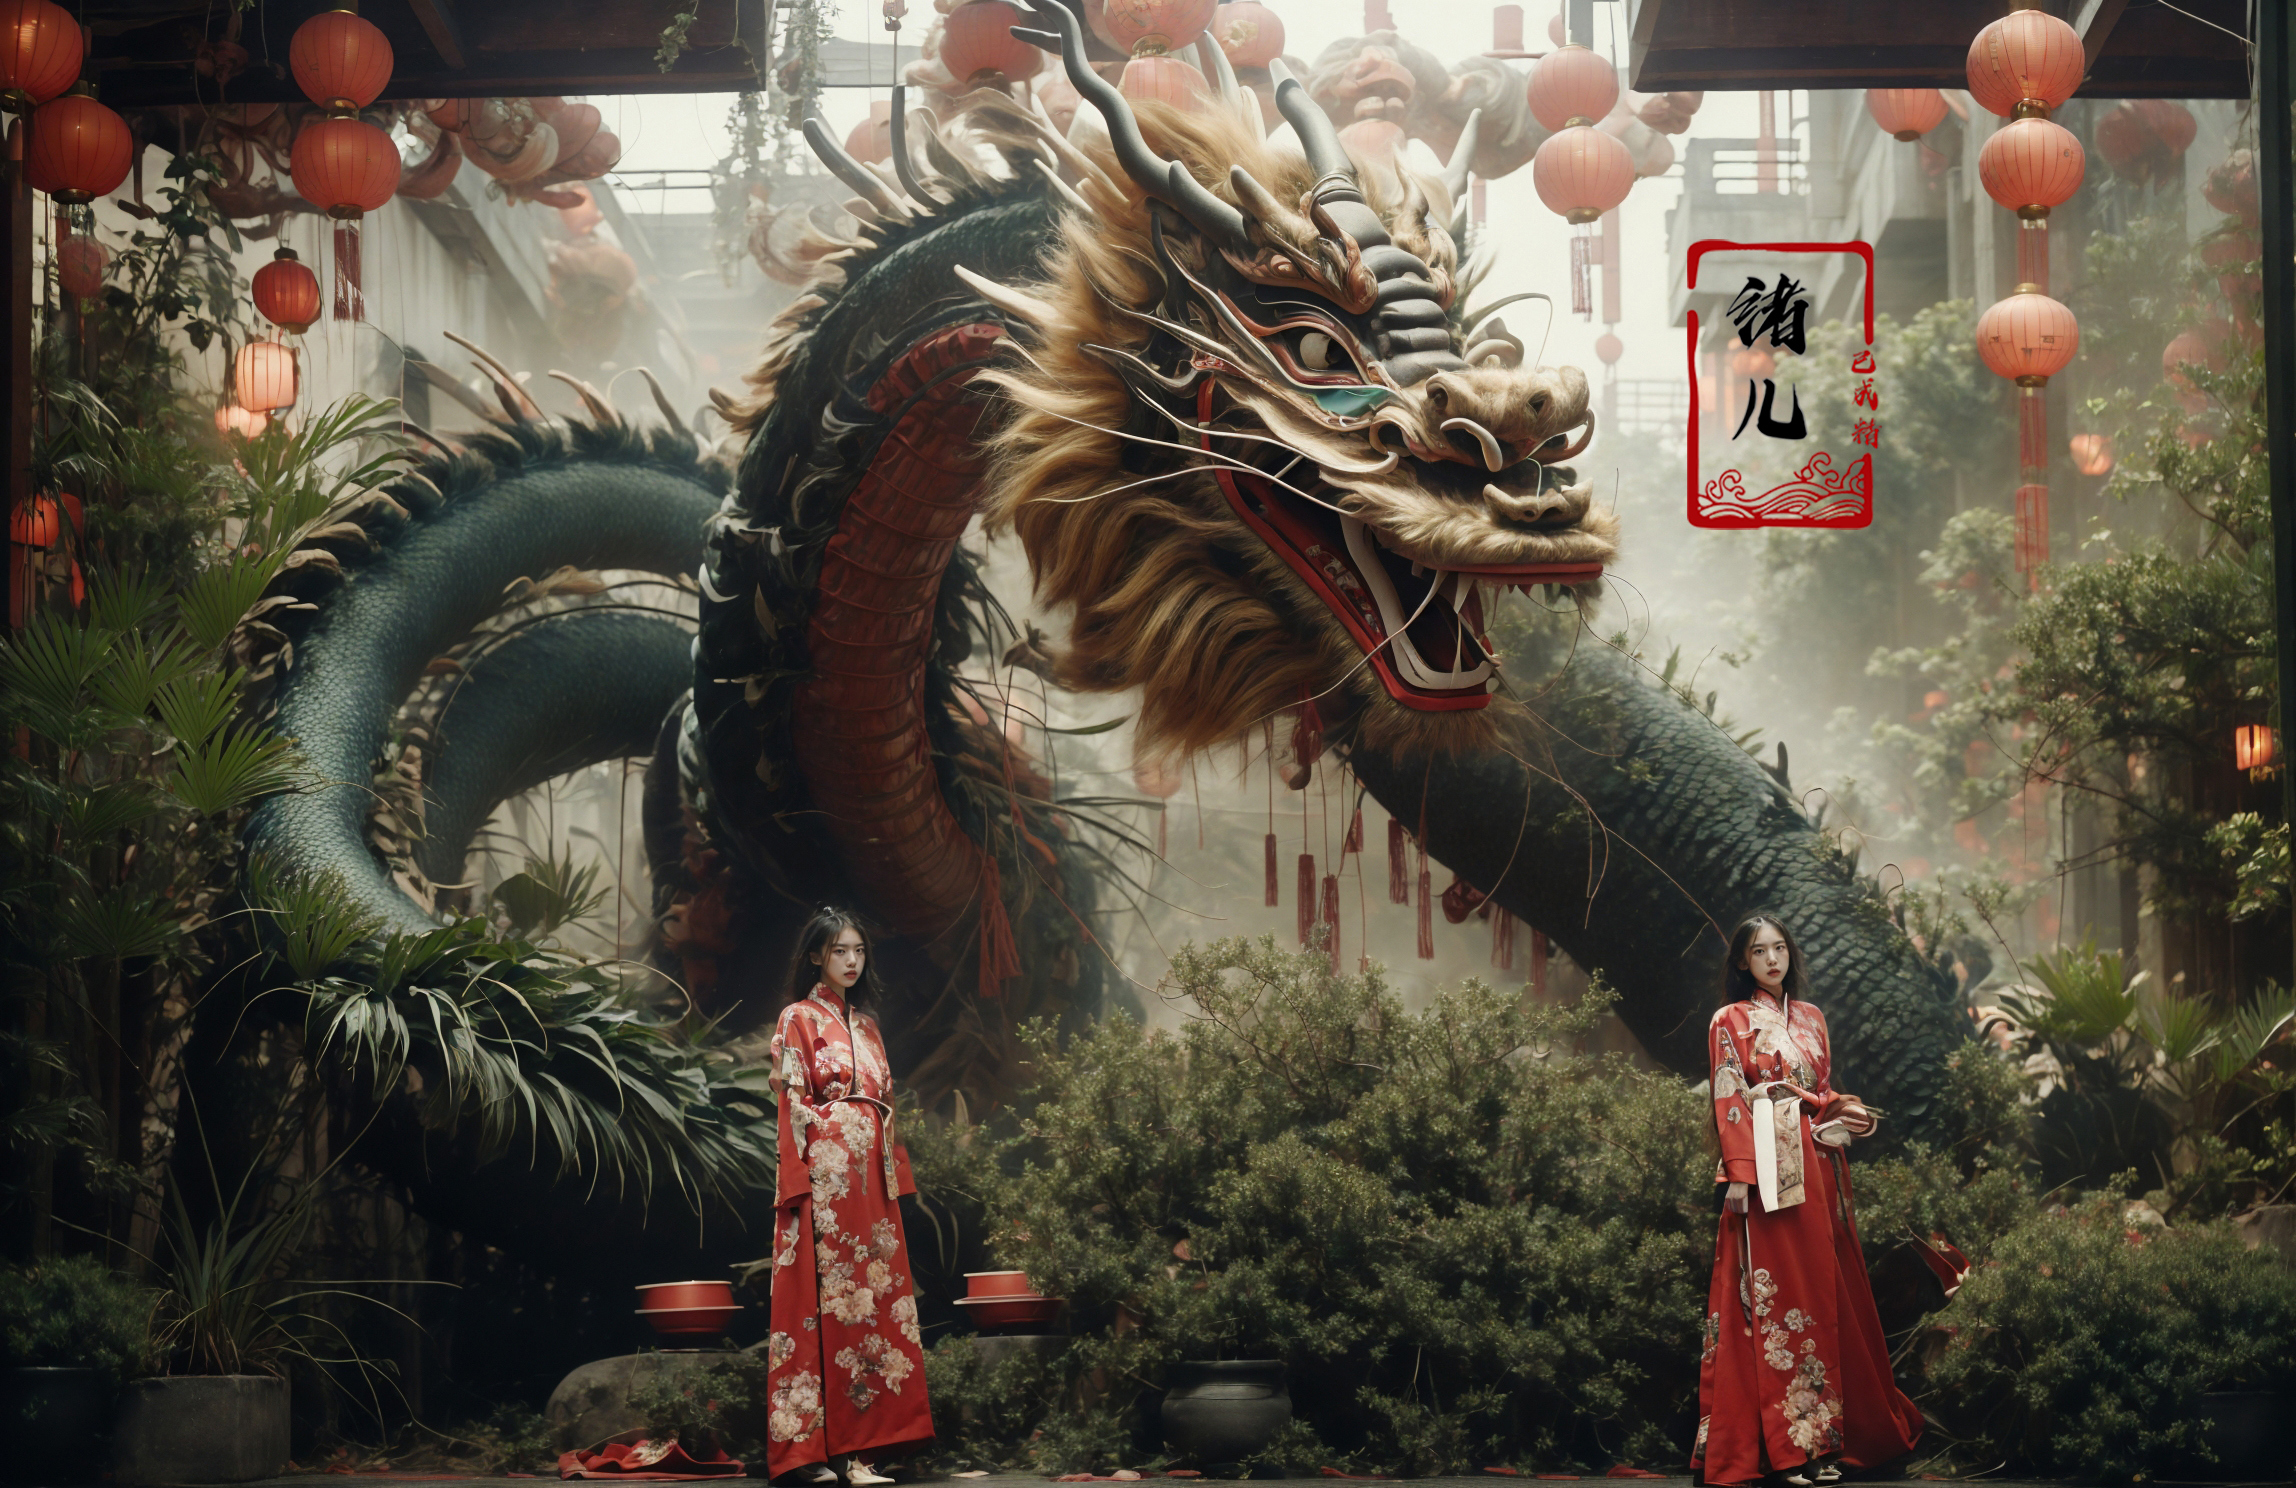 绪儿-龙舞Dragon dance image by XRYCJ